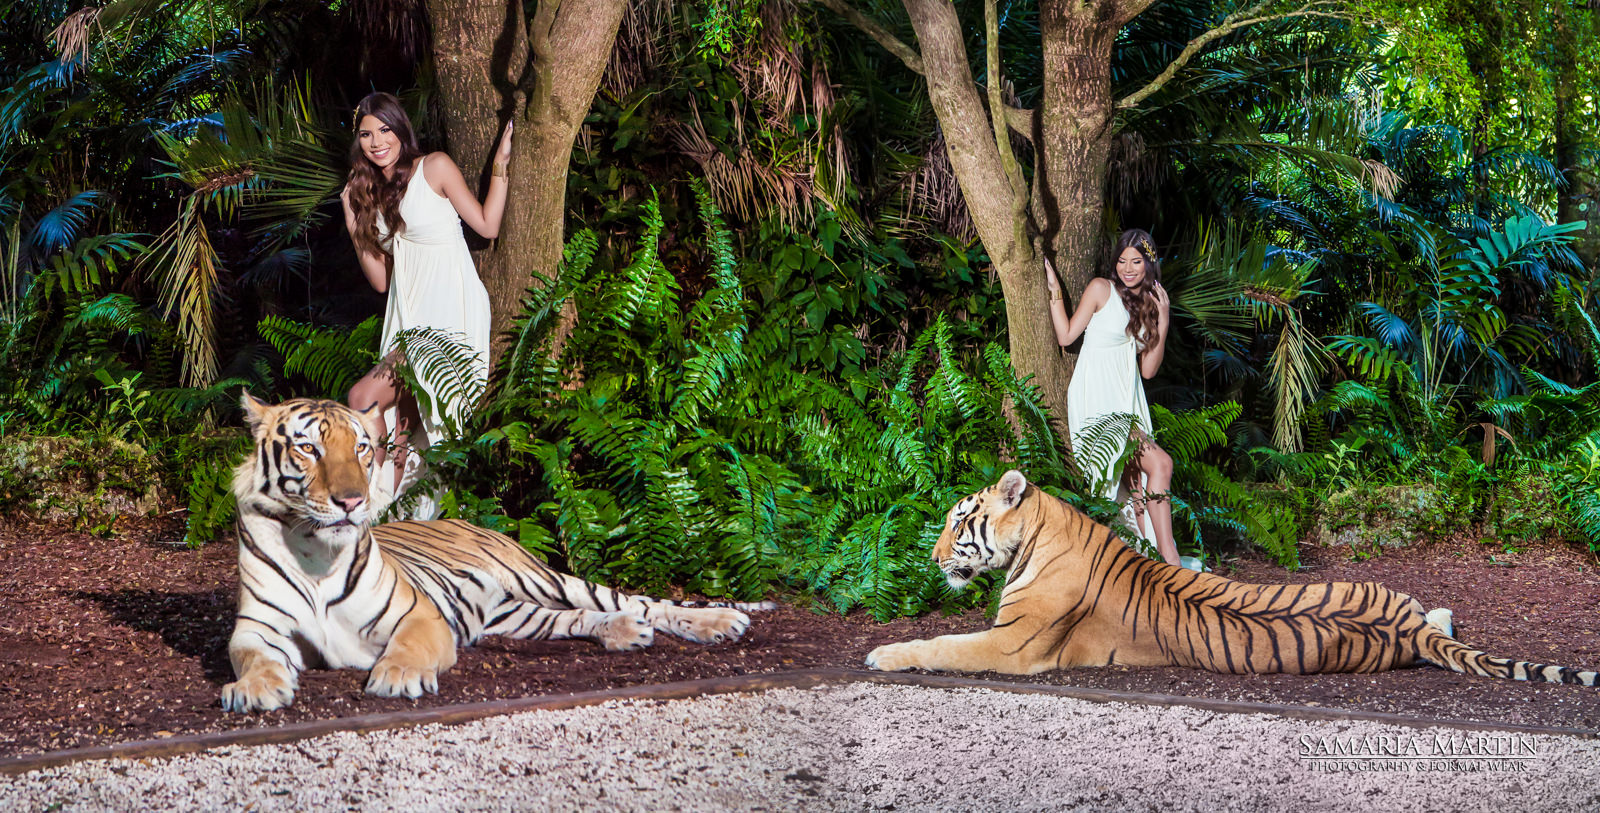 photo with a tiger miami, tiger photo , where to rent a tiger, fotos con tigre miami